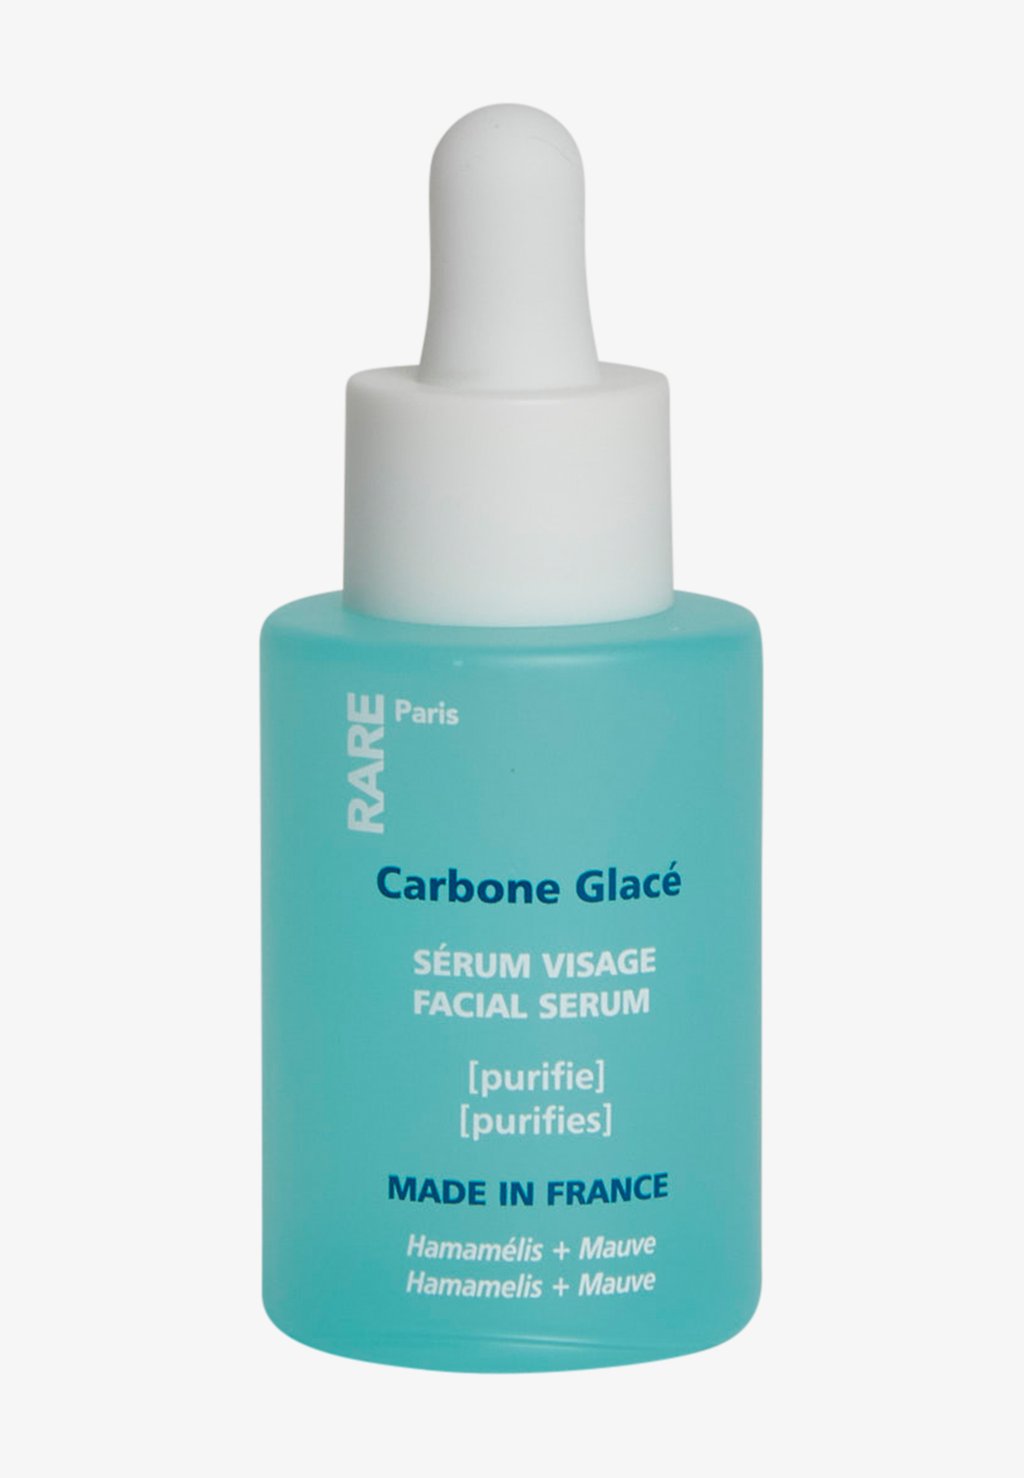 сыворотка для лица rare paris очищающая сыворотка для лица carbone glacé facial serum Сыворотка Carbone Glacé Face Serum Rare Paris, синий